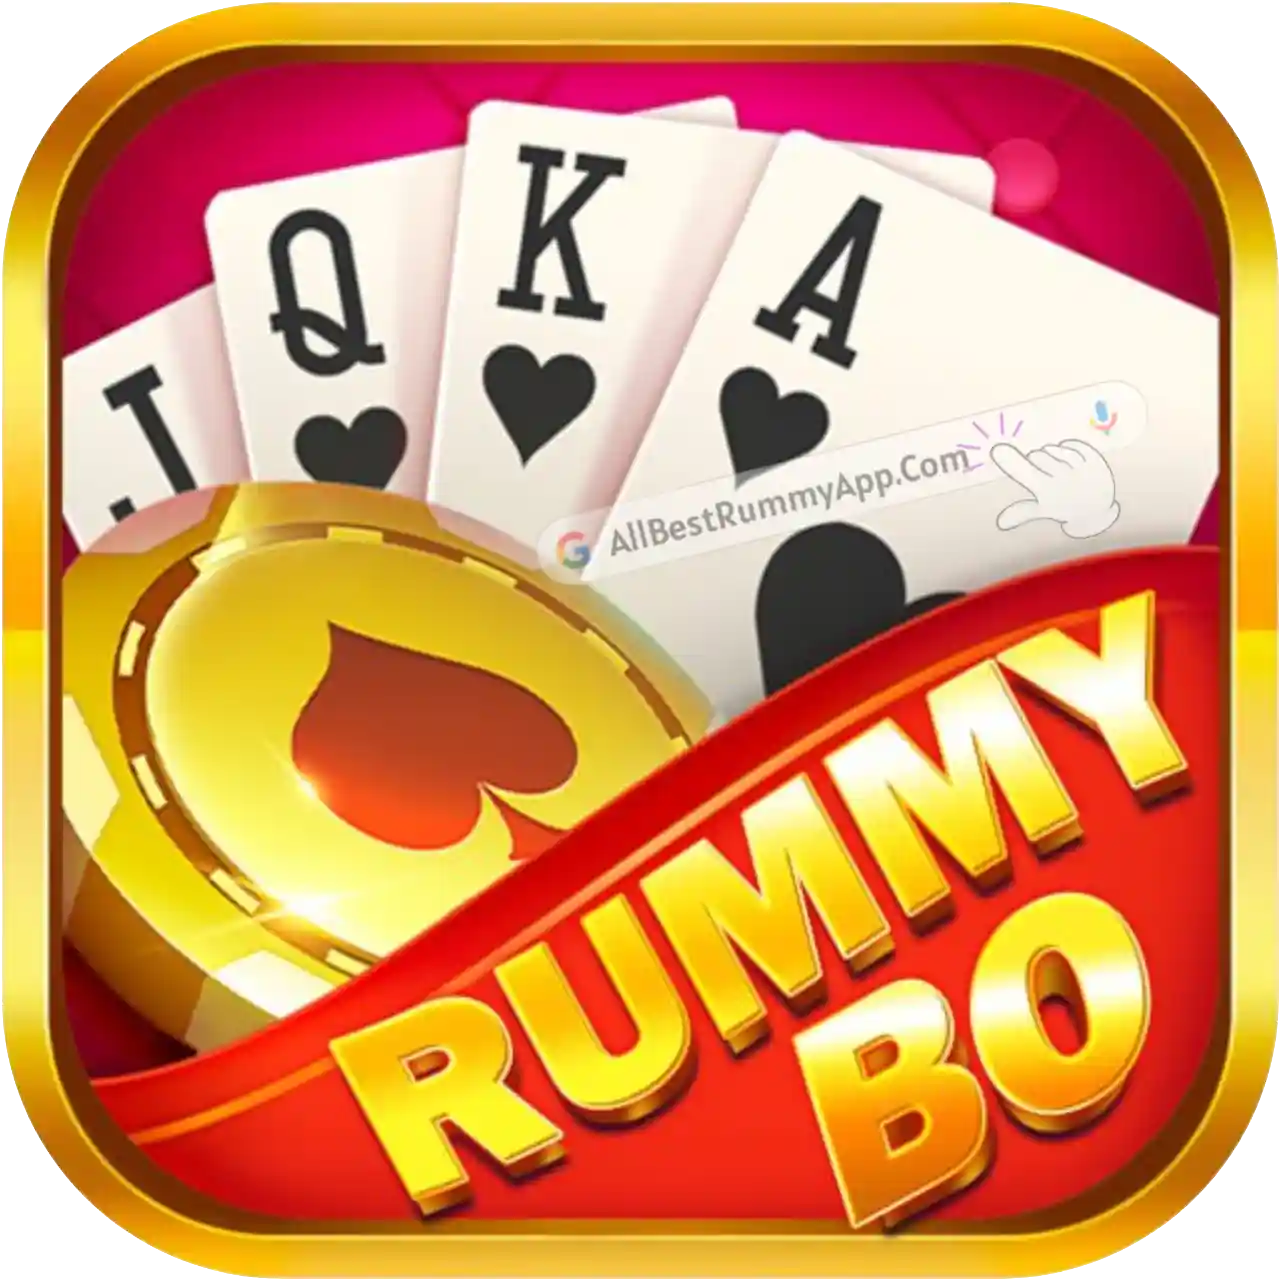 India Rummy APk - All Rummy App